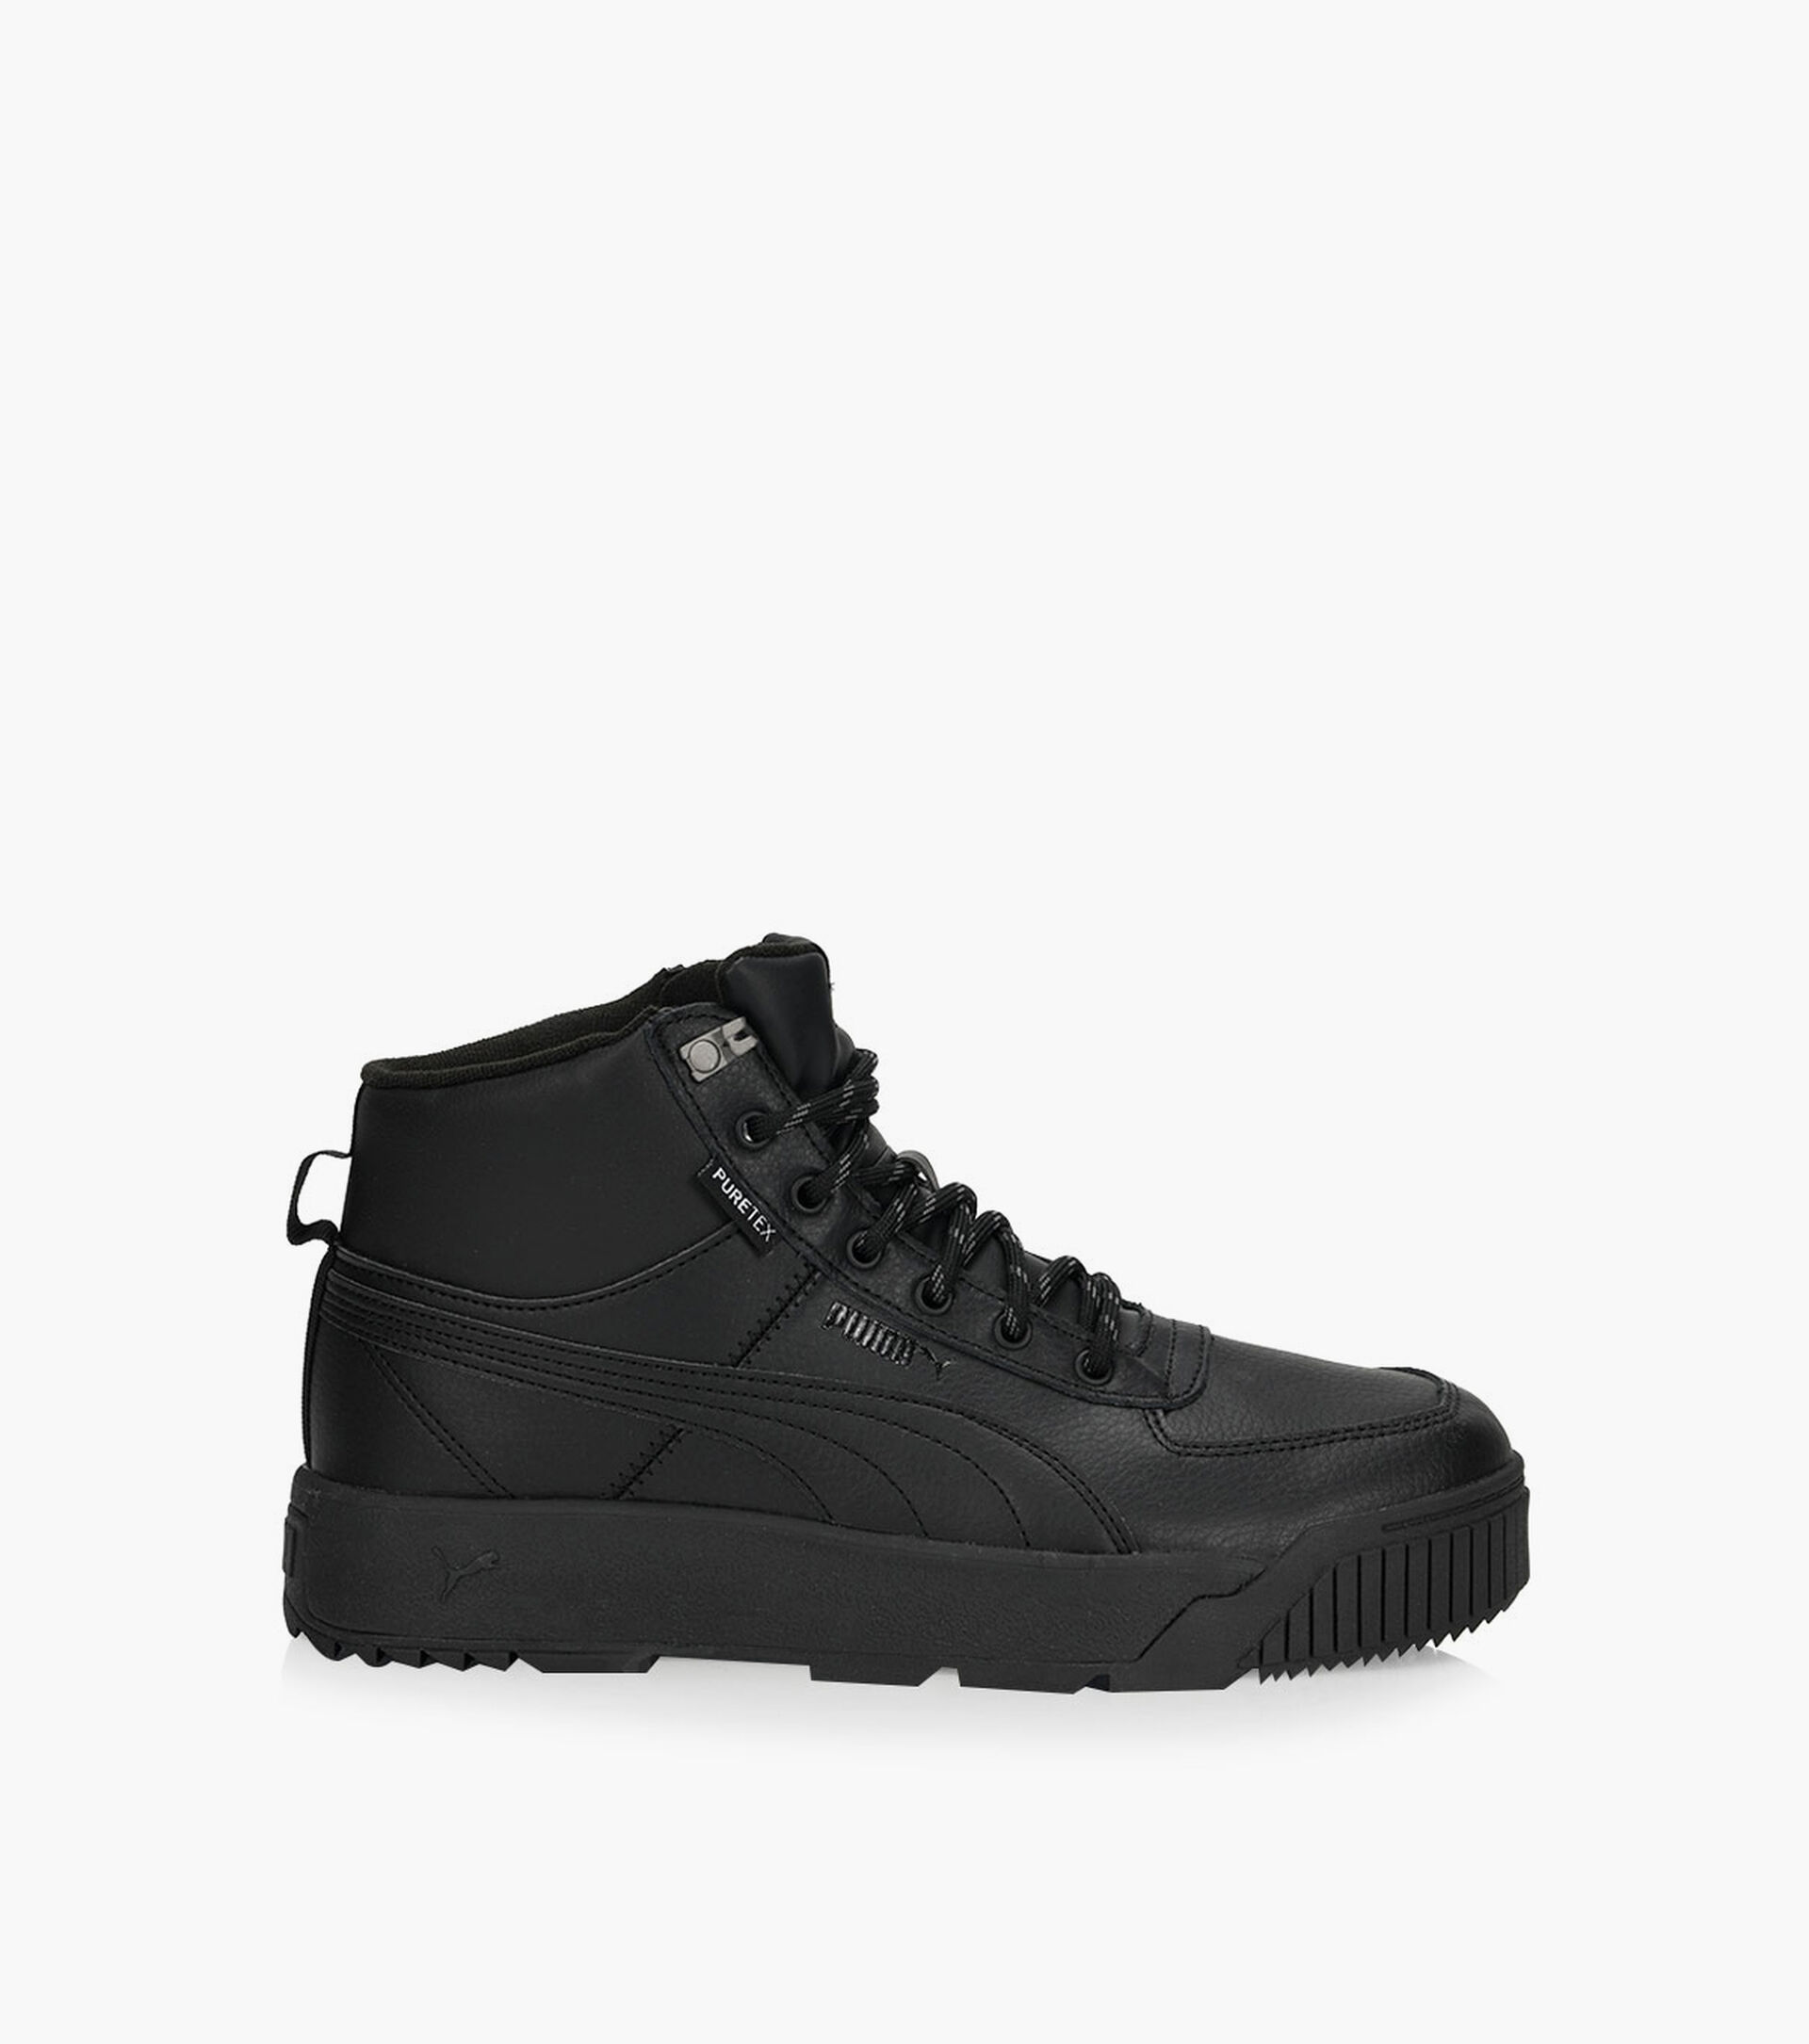 PUMA TARRENZ SB PURETEX - Black Leather | Browns Shoes